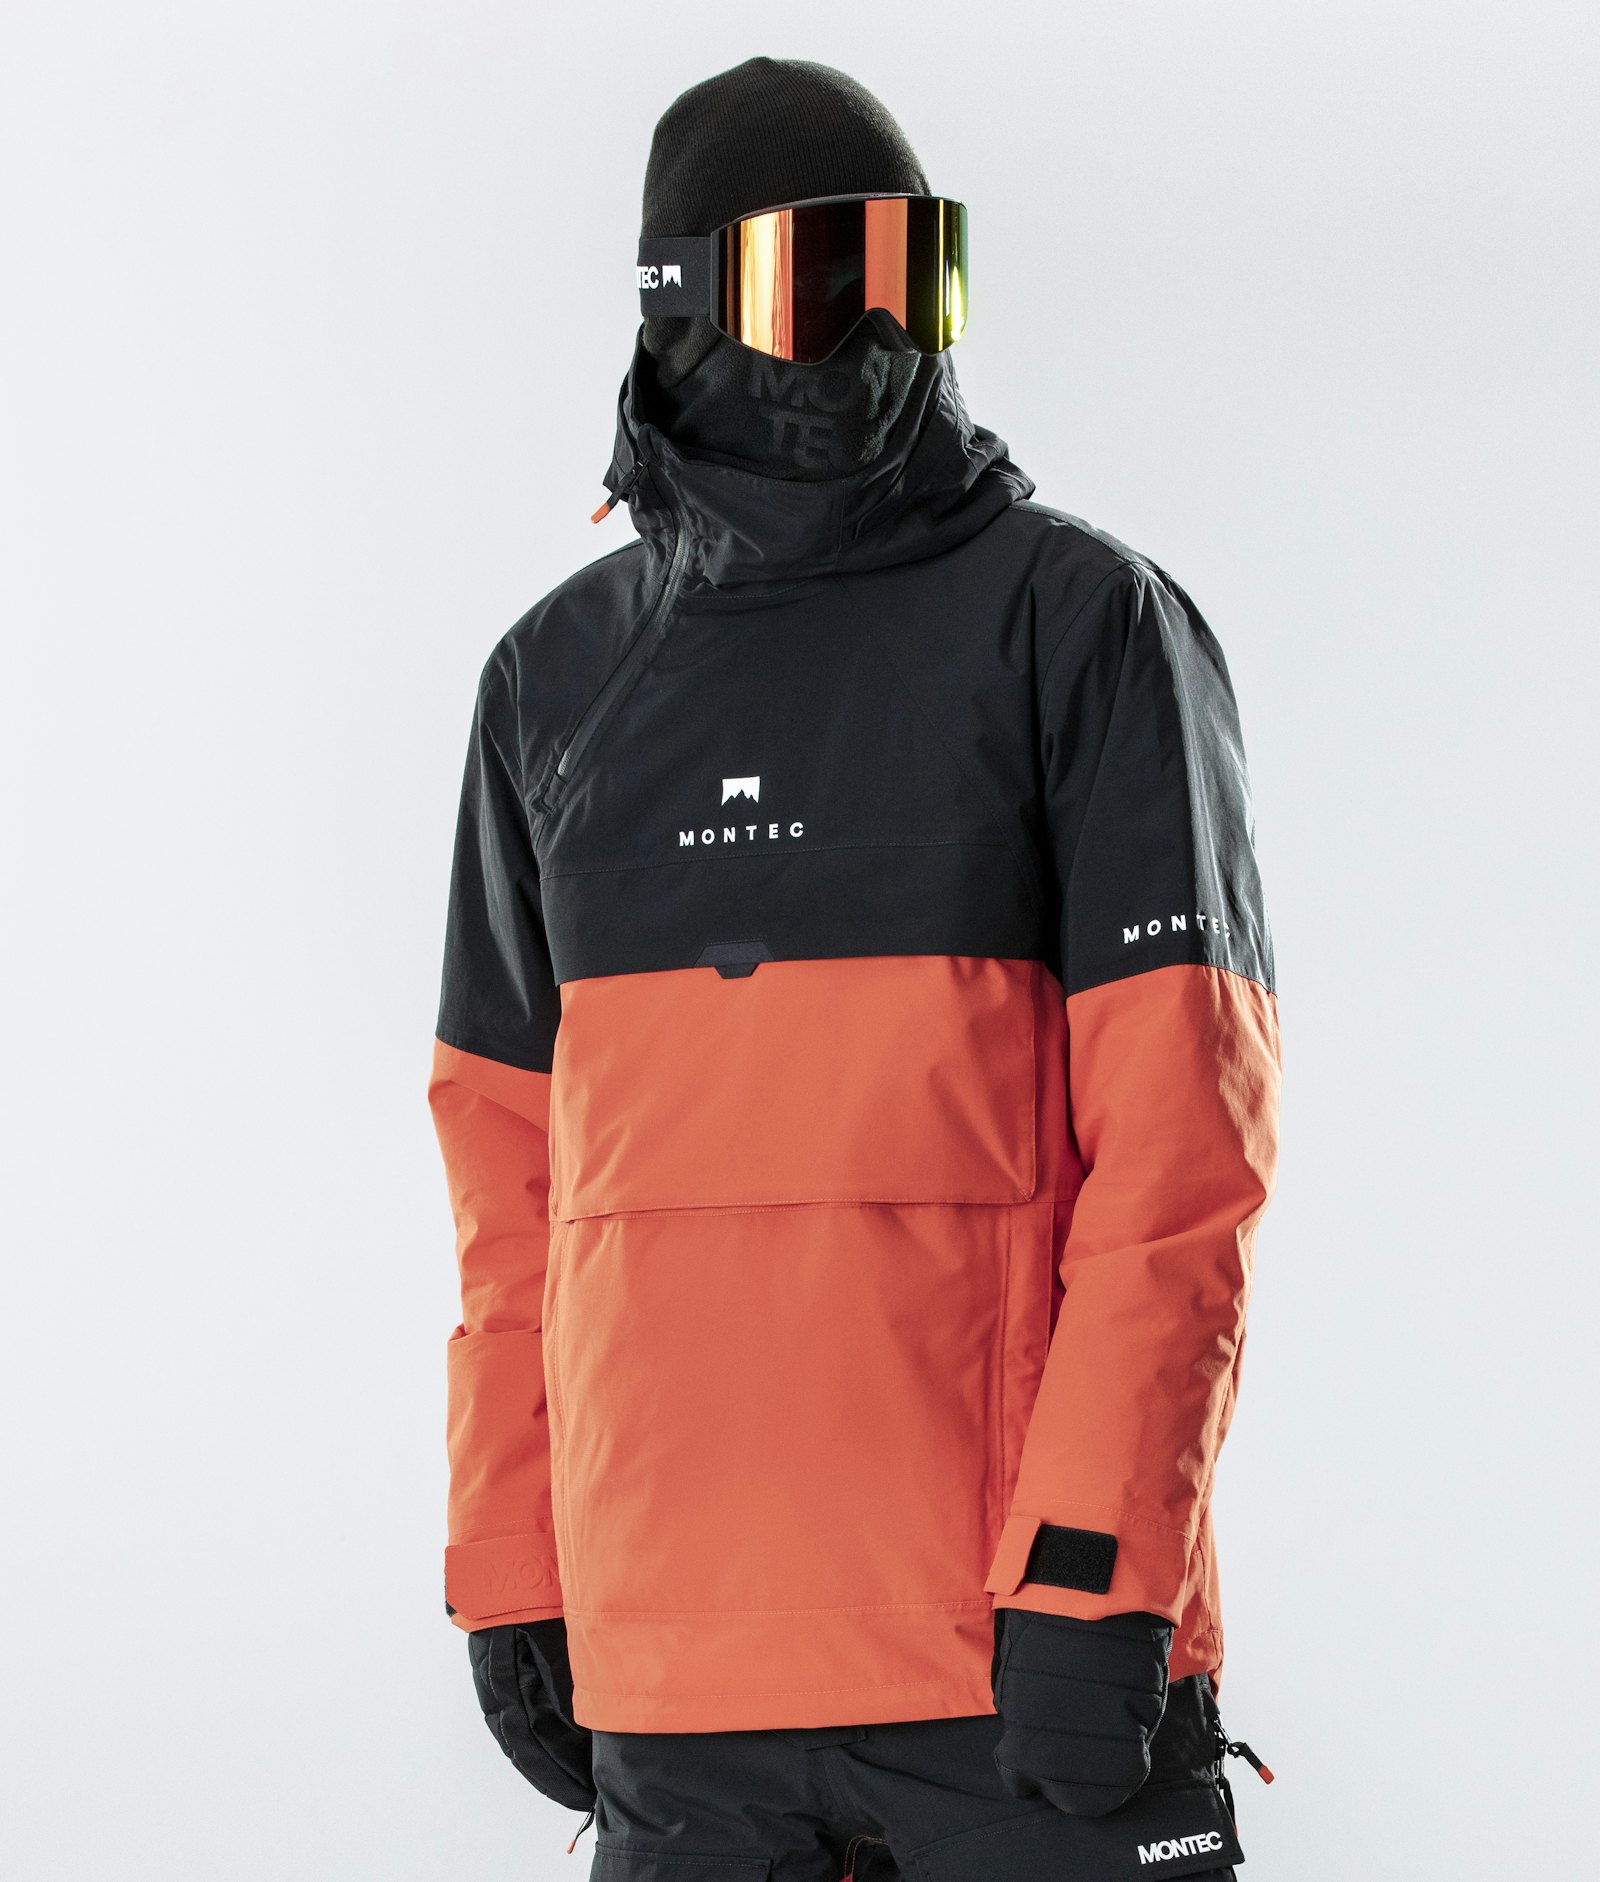 Dune 2020 Chaqueta Snowboard Hombre Black/Orange